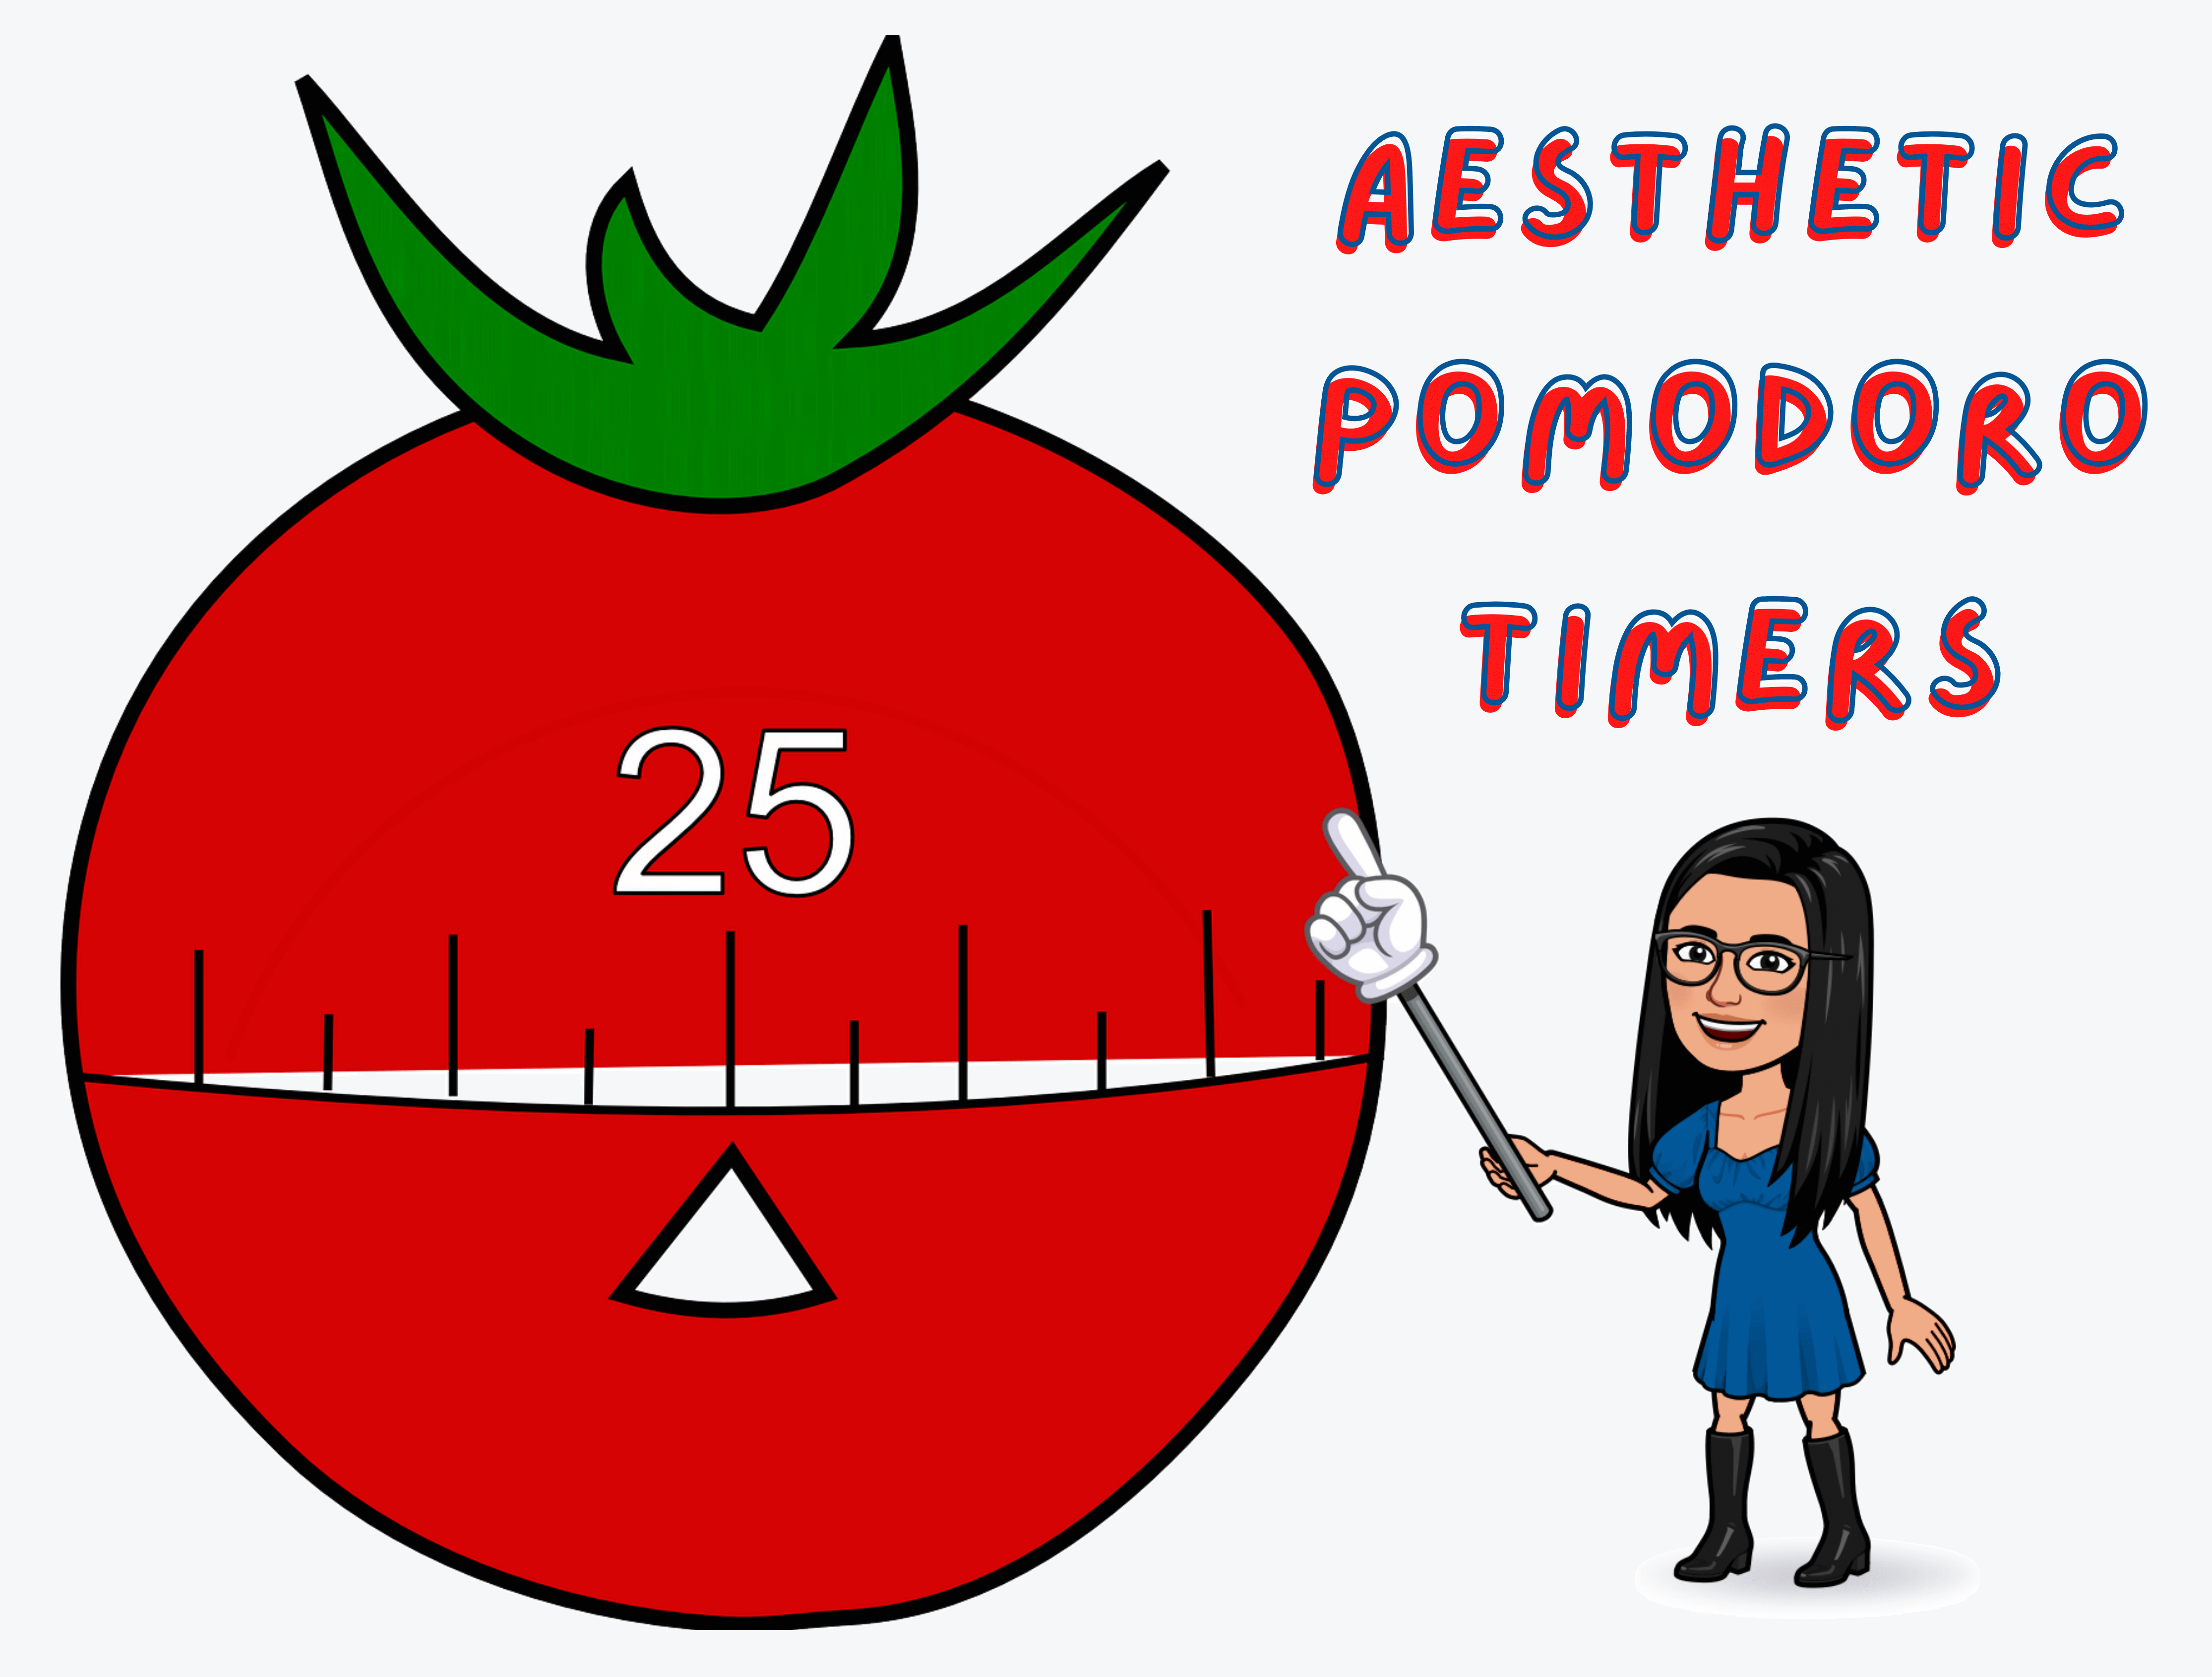 Aesthetic Pomodoro Timers